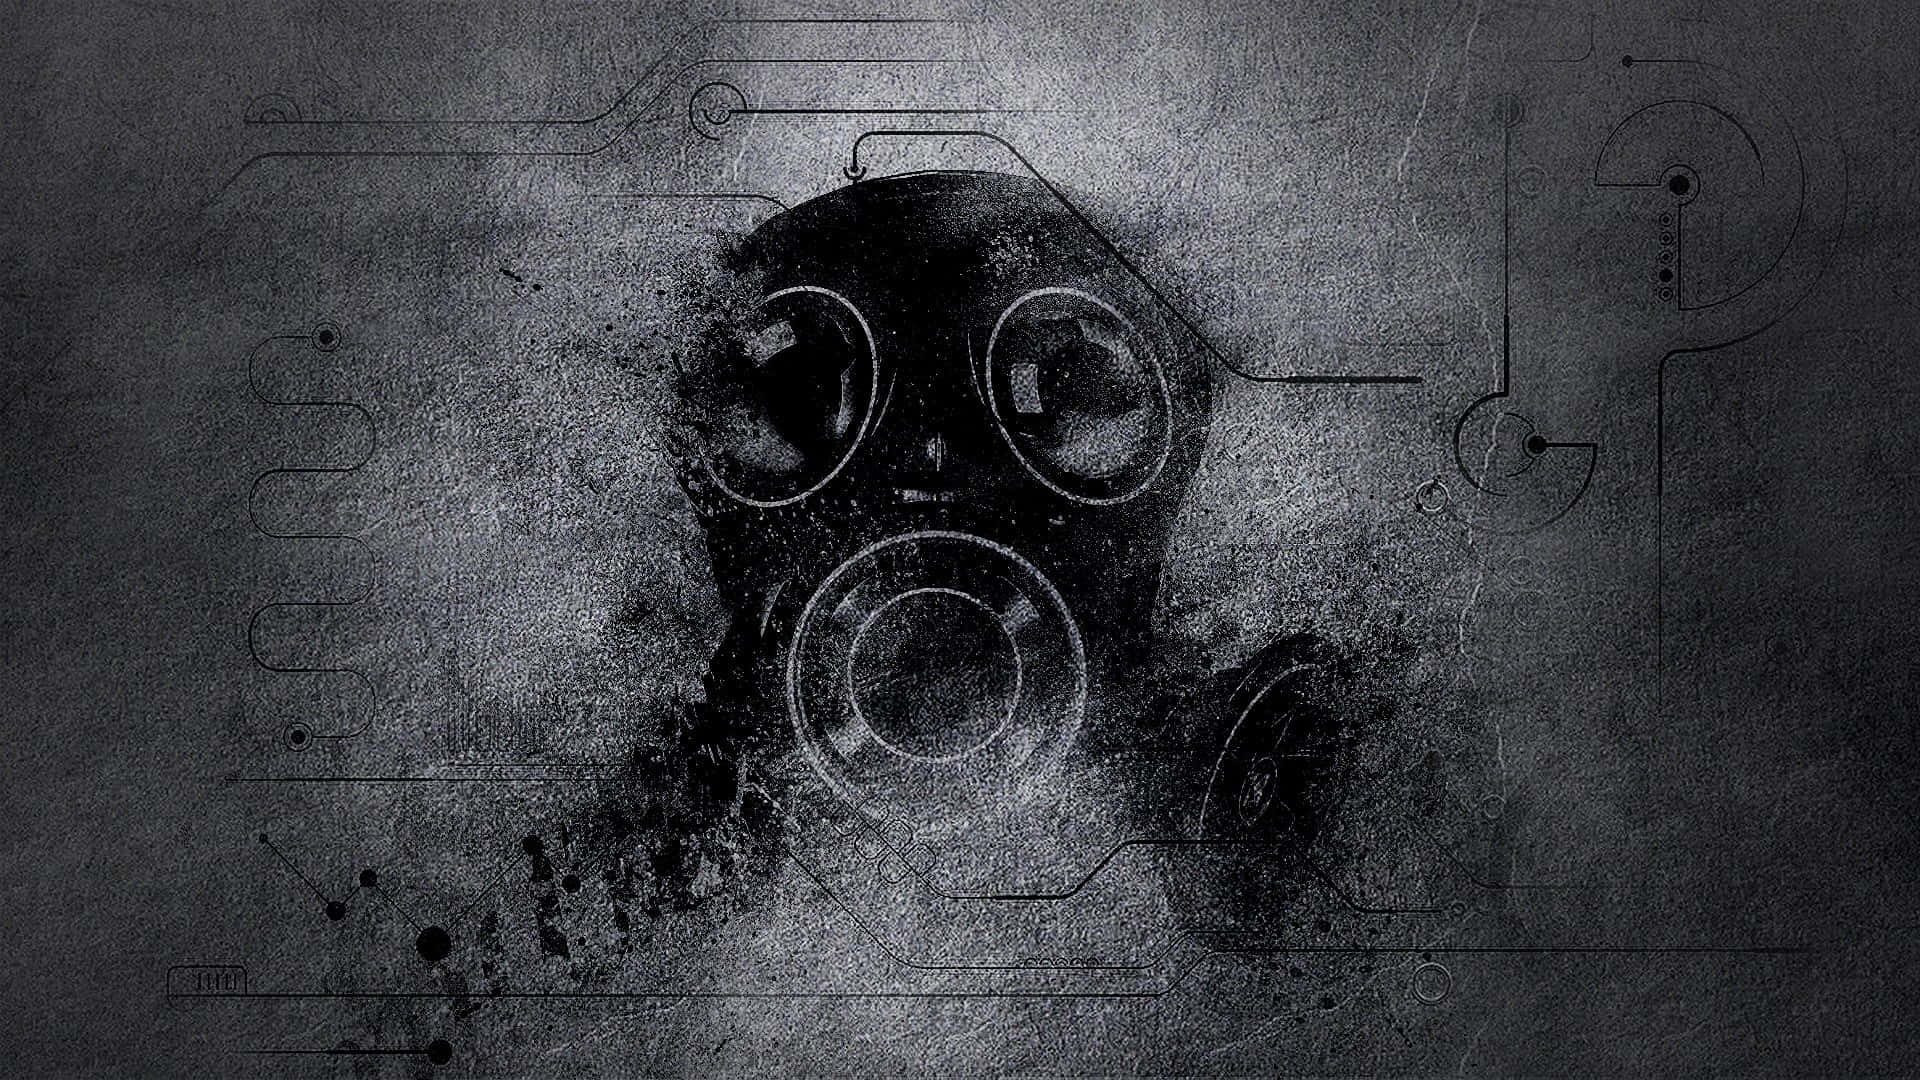 Abstract Gas Mask Artwork Wallpaper